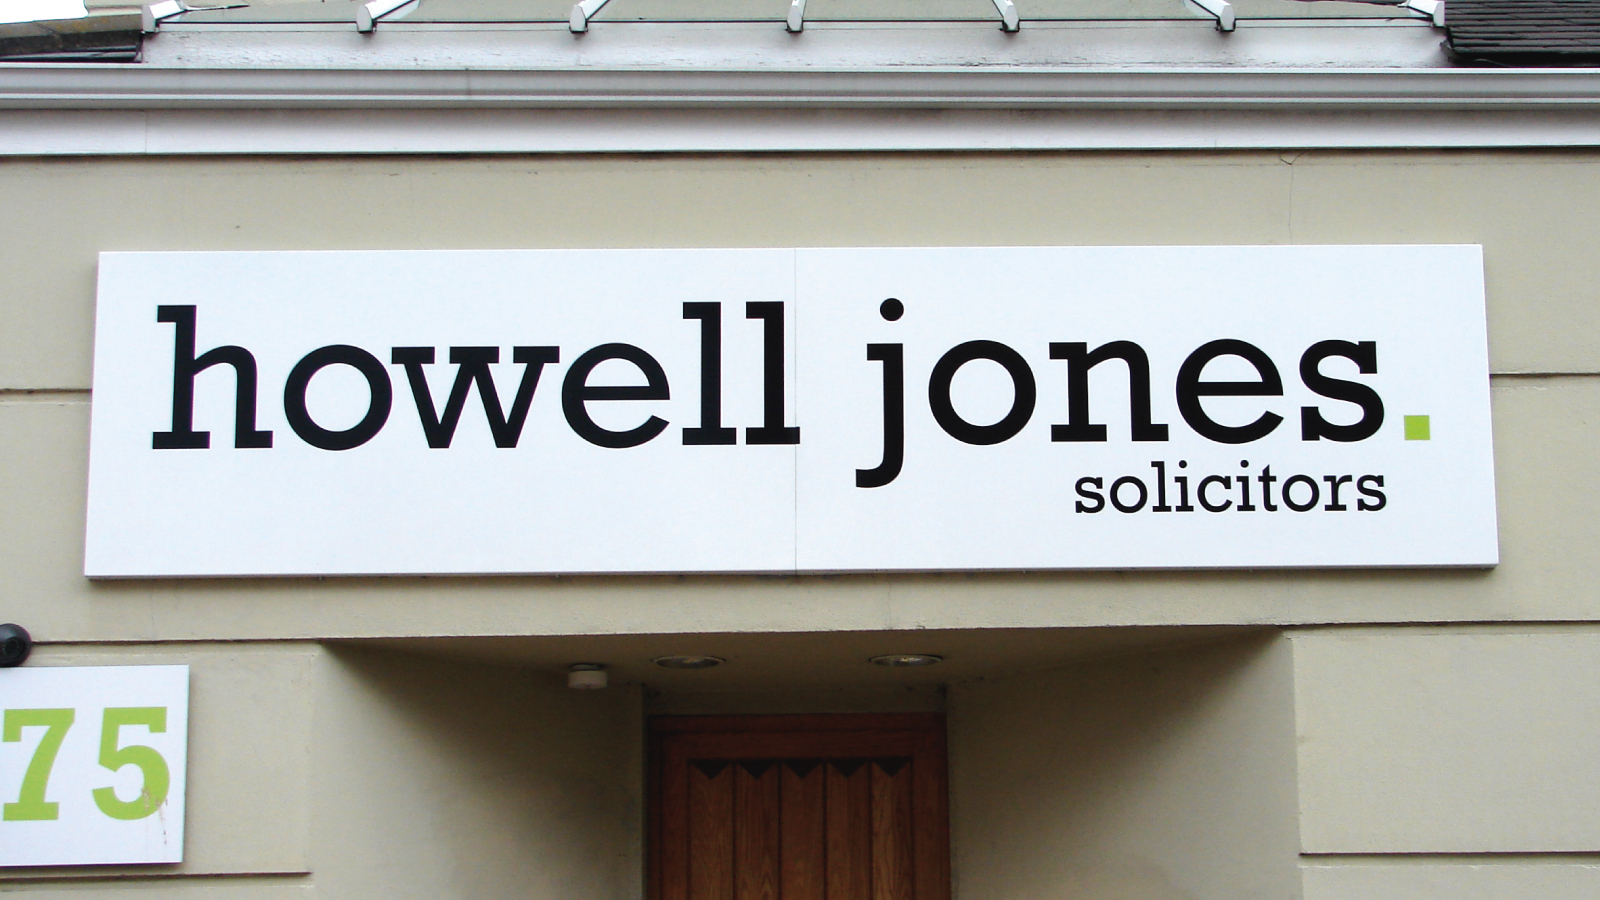 Surrey brand agency for Howell Jones signage